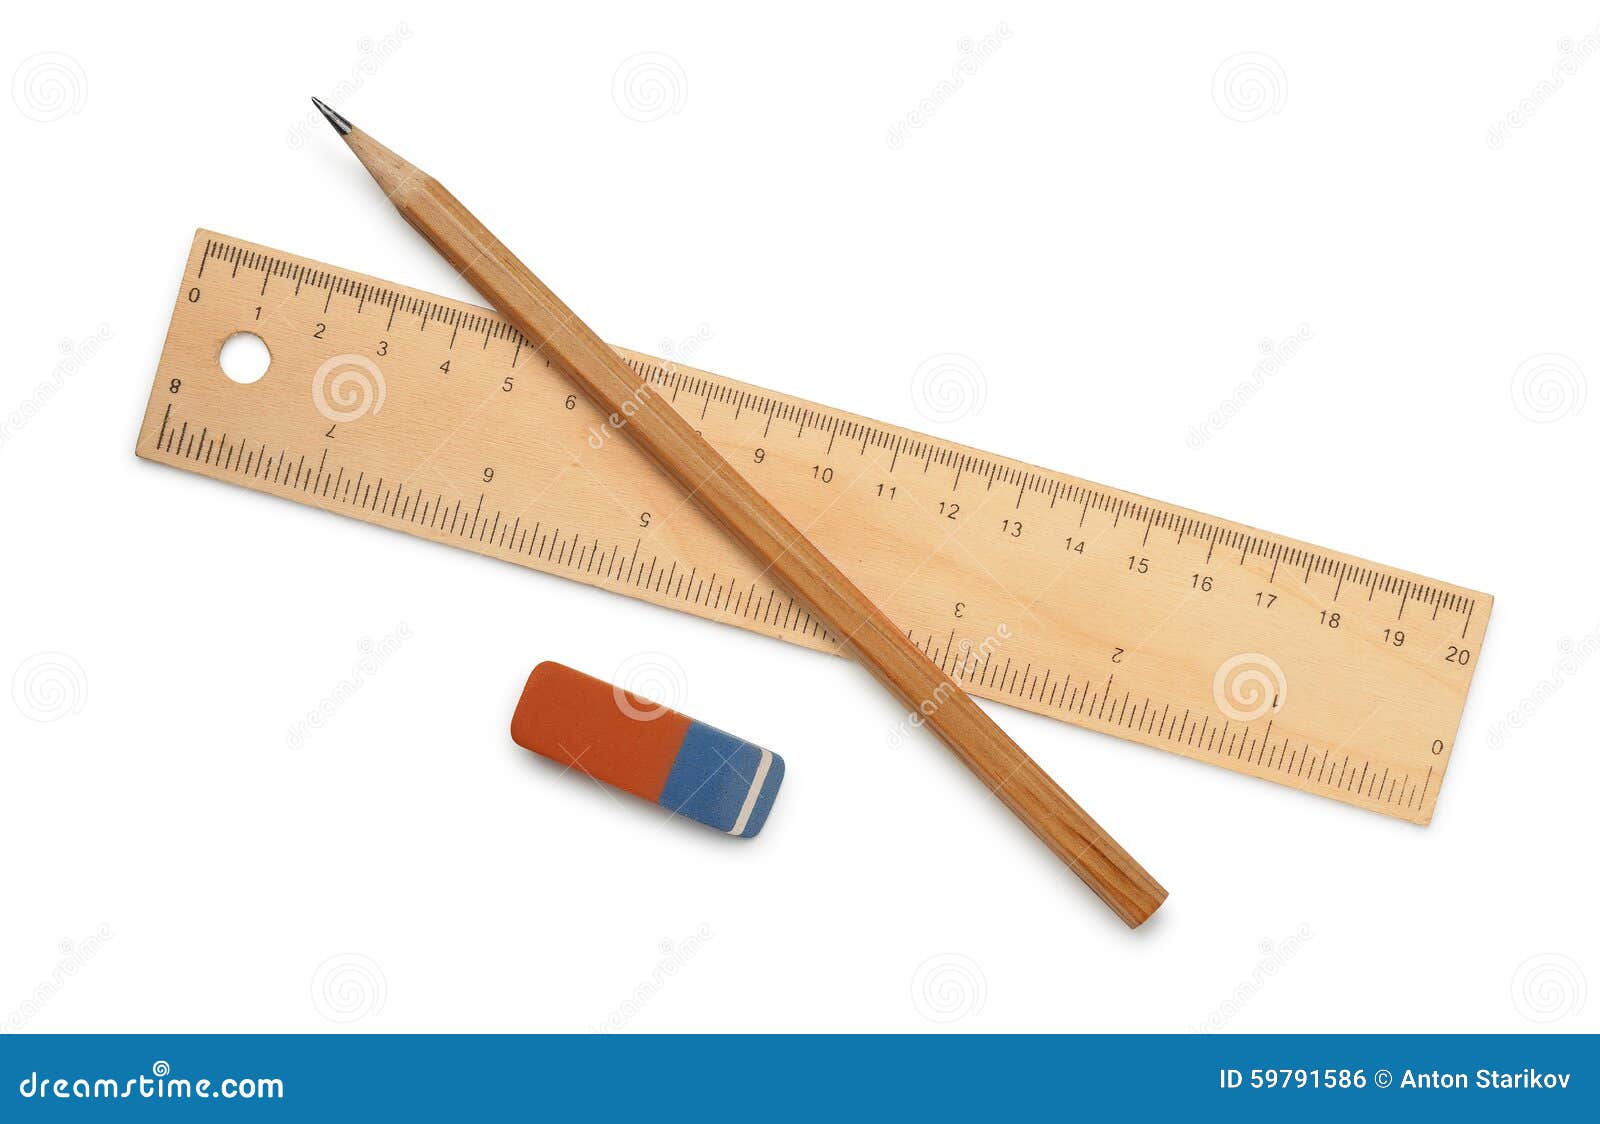 ruler, pencil and eraser